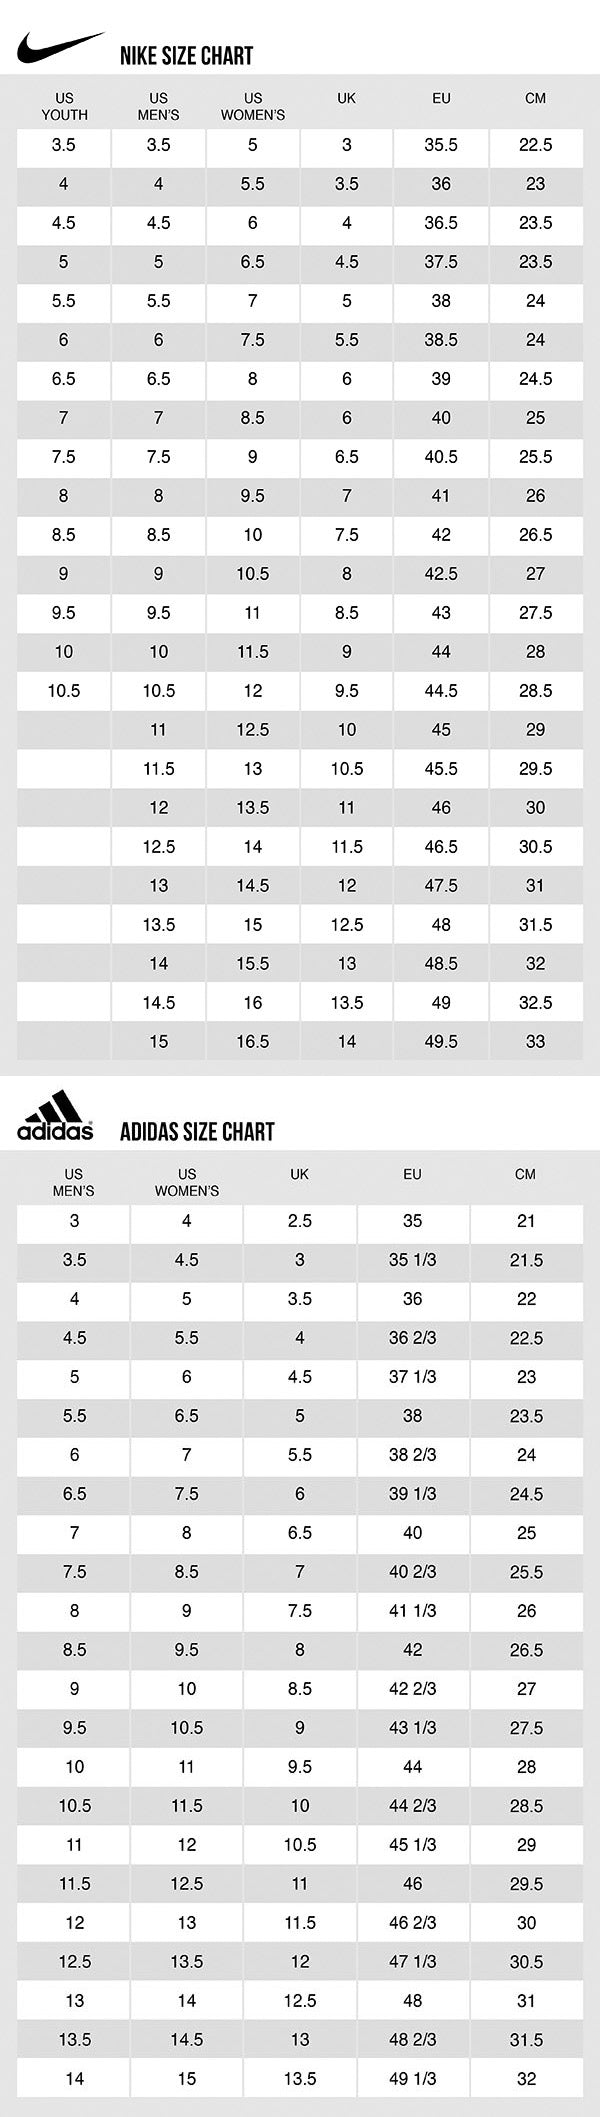 Size 9- adidas Yeezy Foam Runner CARBON (UNRELEASED)